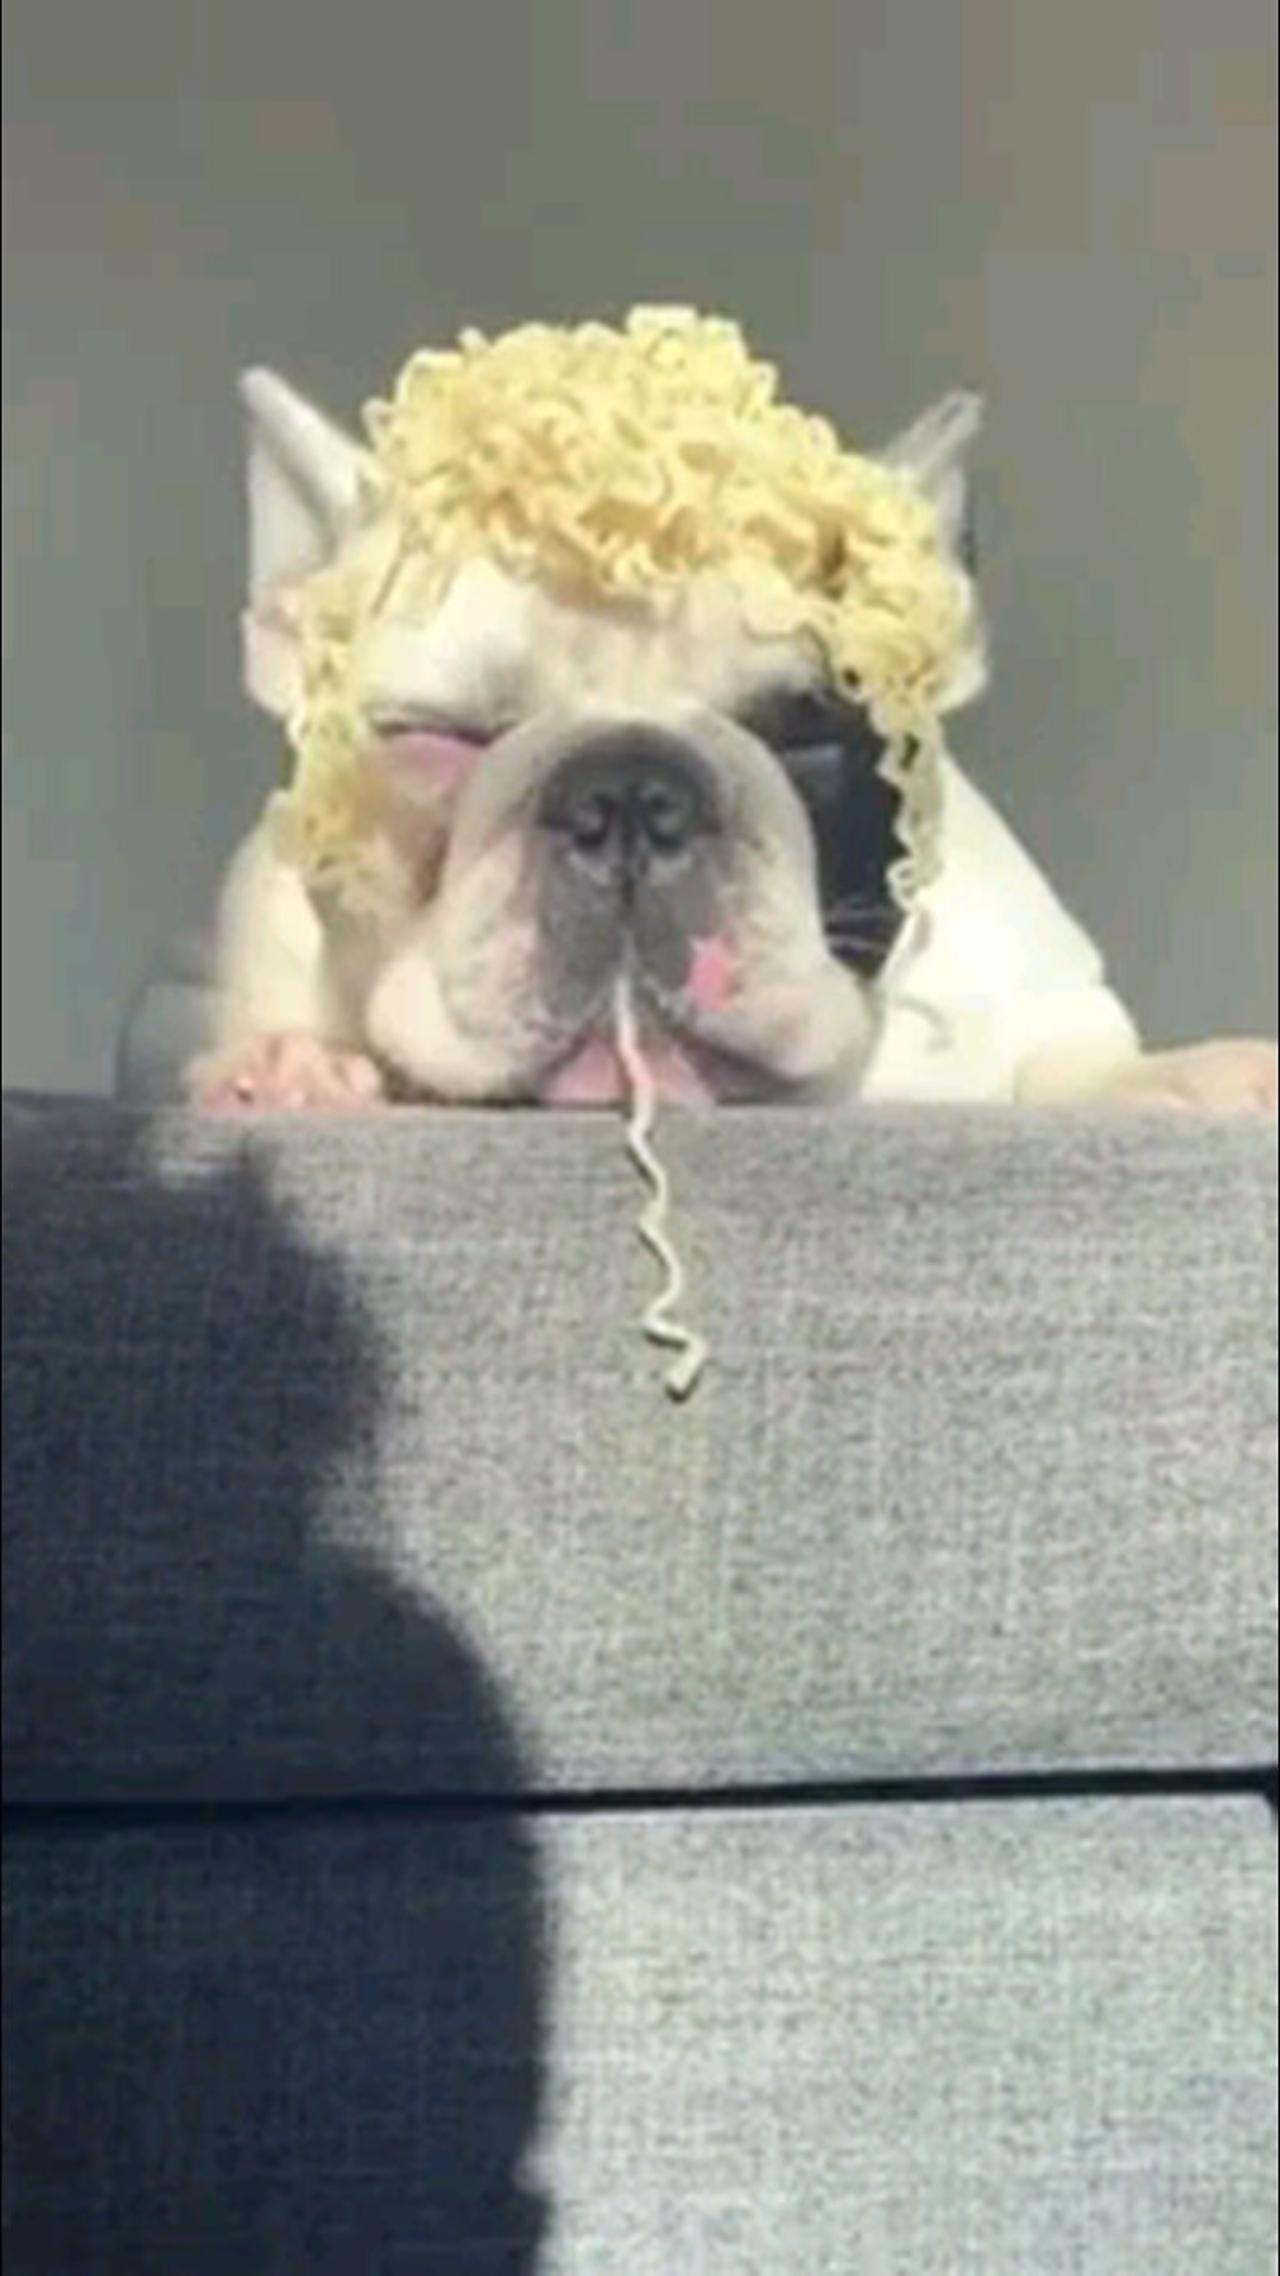 Blonde Hair on a Dog????